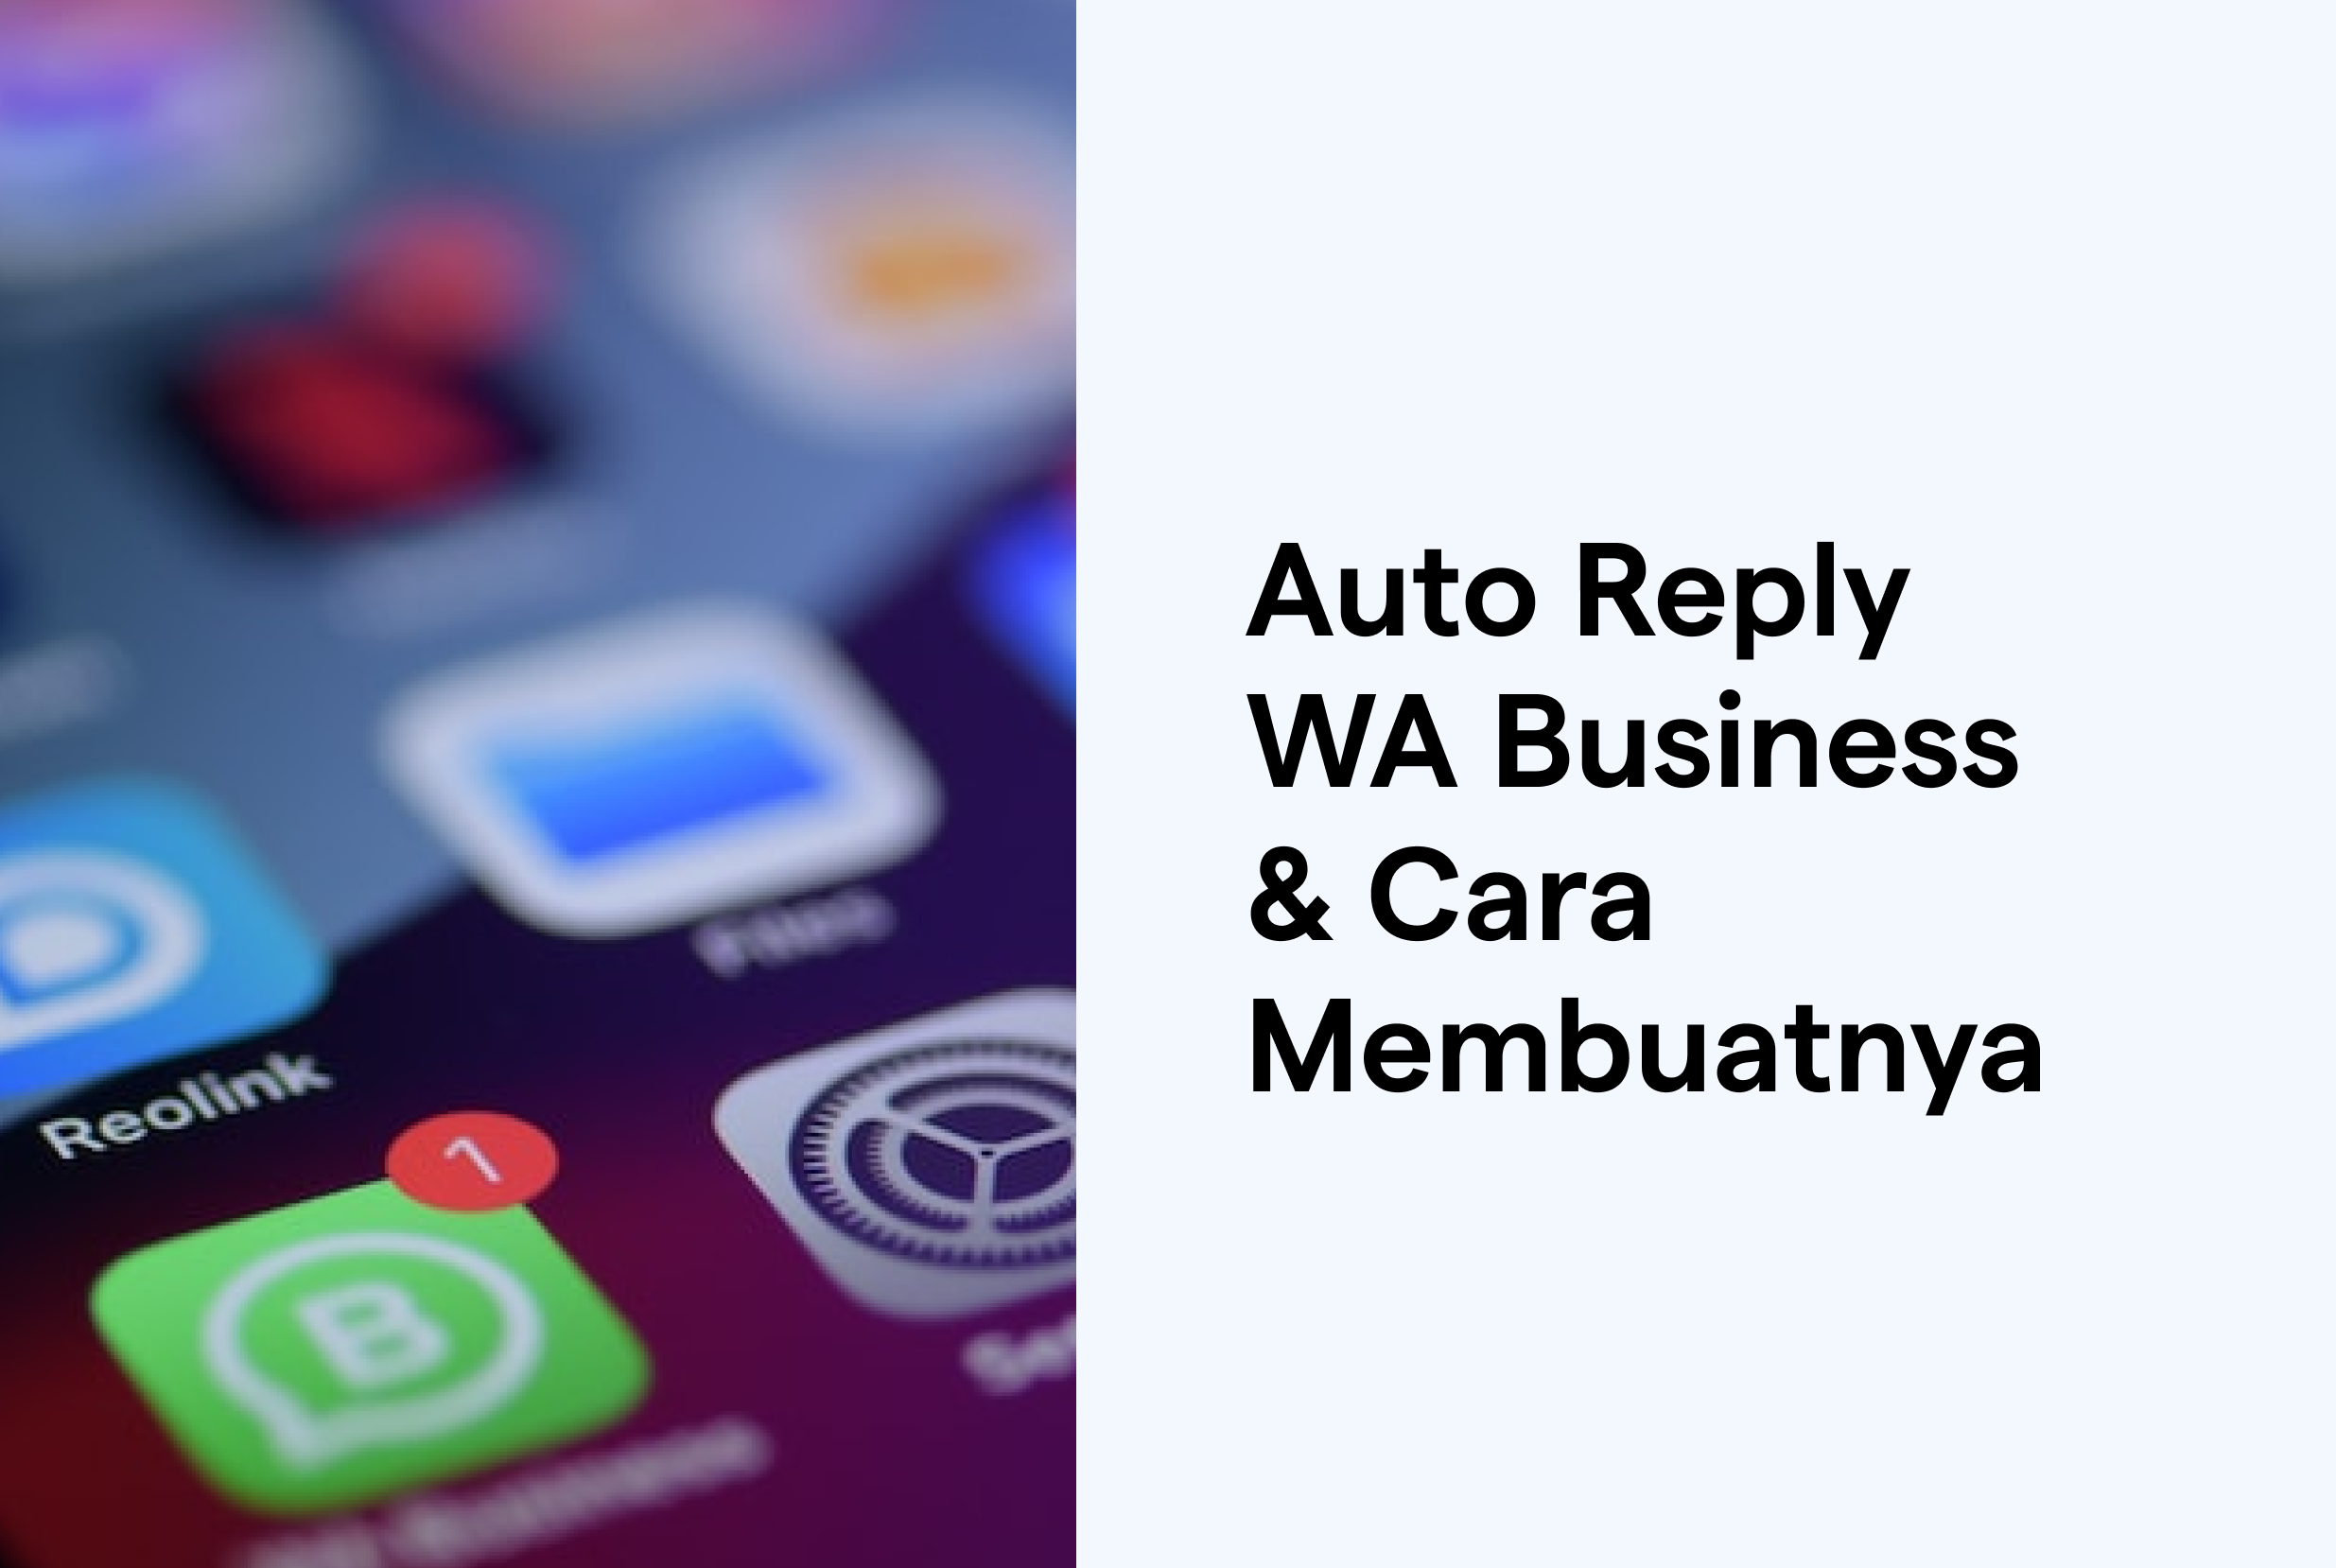 Auto Reply WA Business & Cara Membuatnya